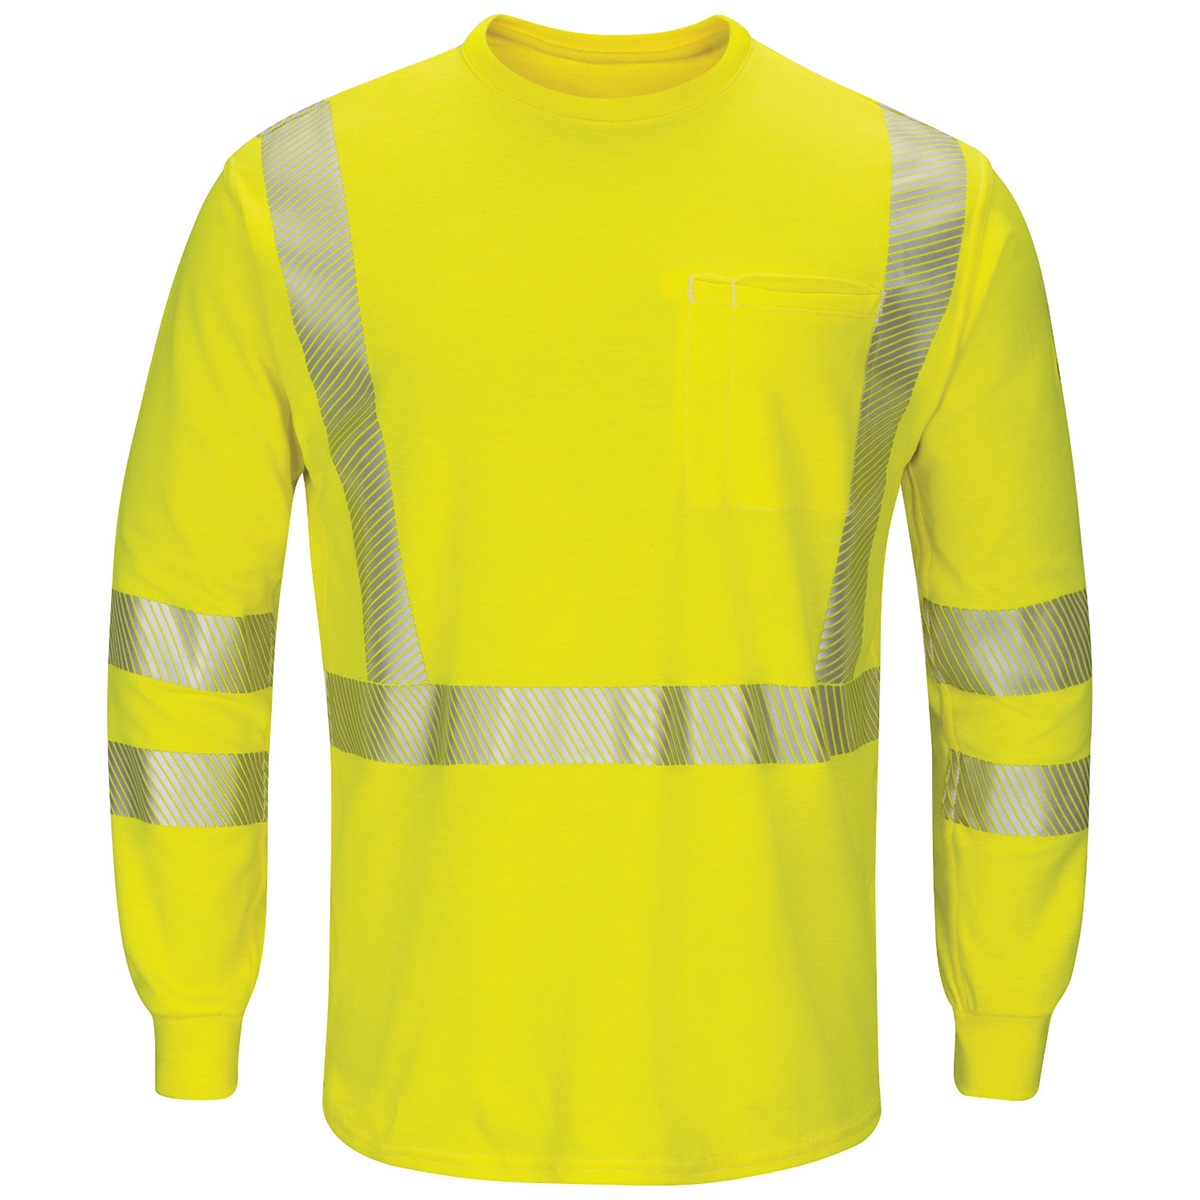 Bulwark Hi-Vis Lightweight Shirt in Hi-Vis Yellow